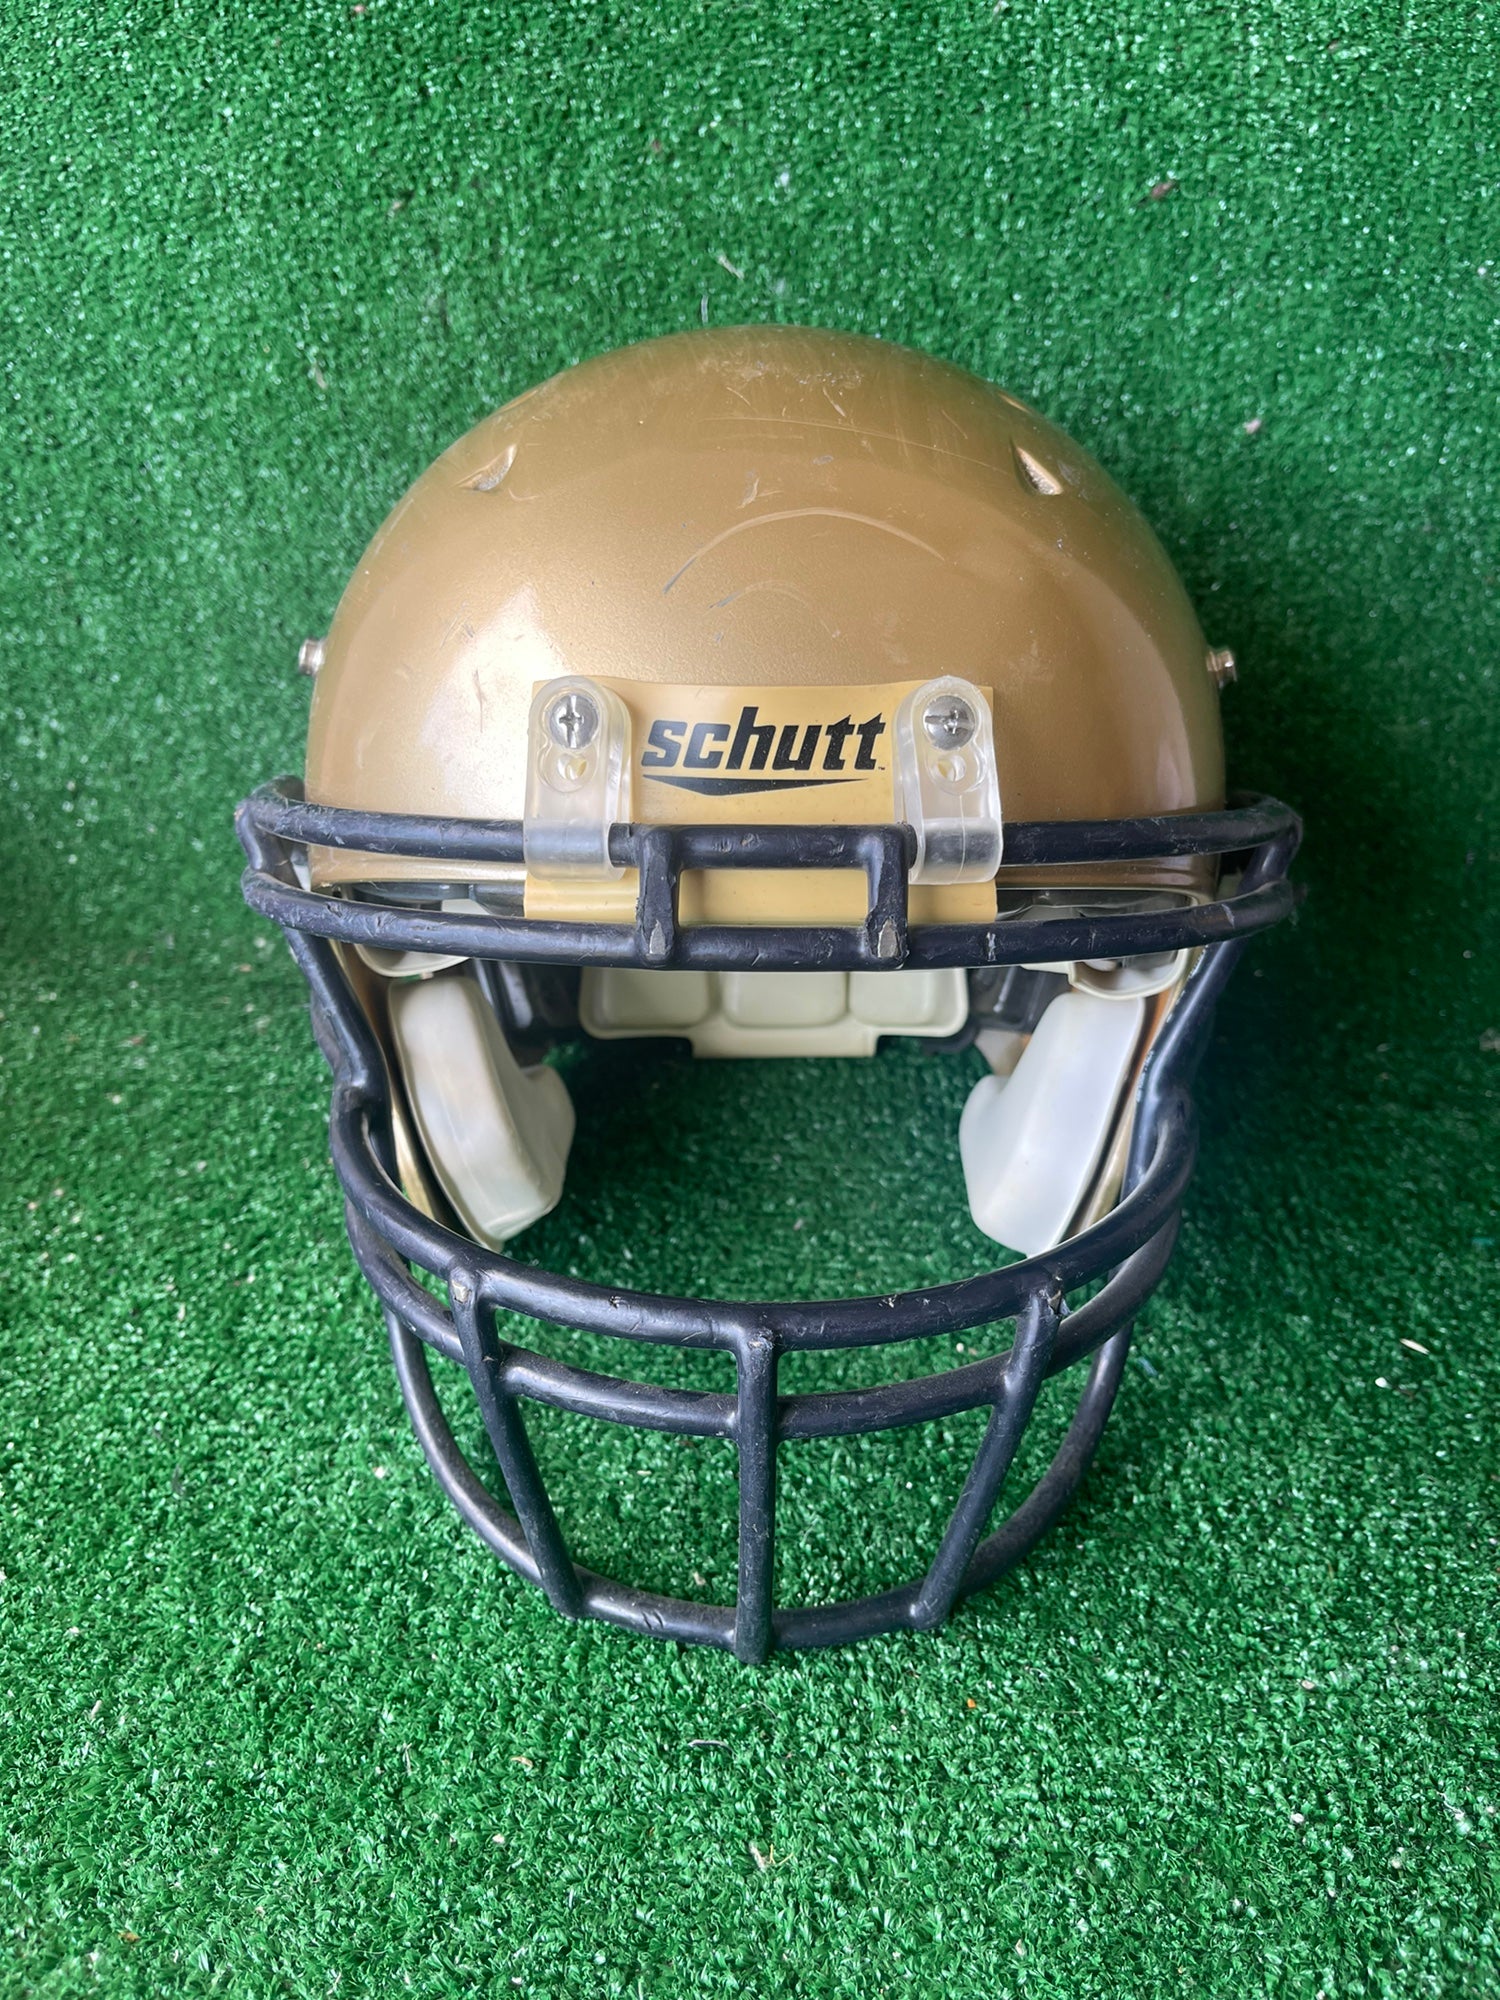 Schutt American Football Helmet DNA Pro Large White Recertified 2018 